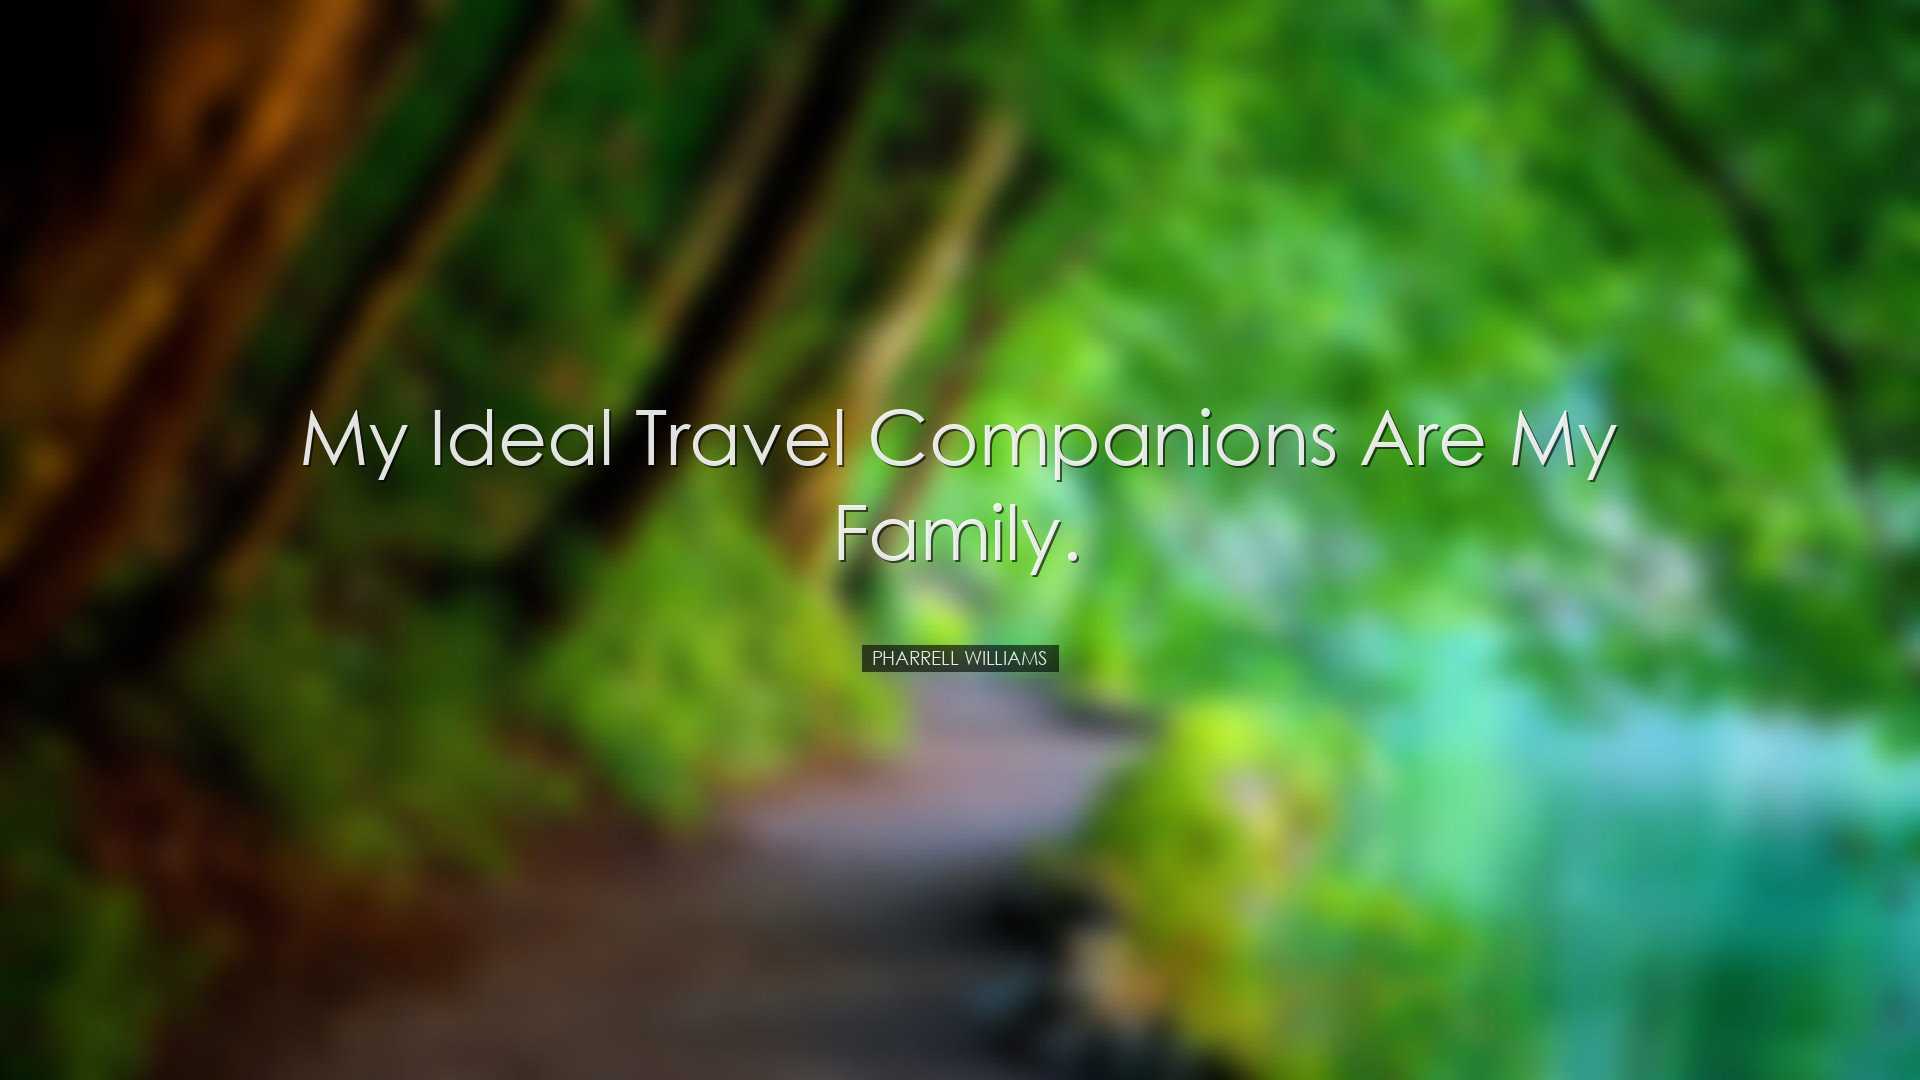 My ideal travel companions are my family. - Pharrell Williams